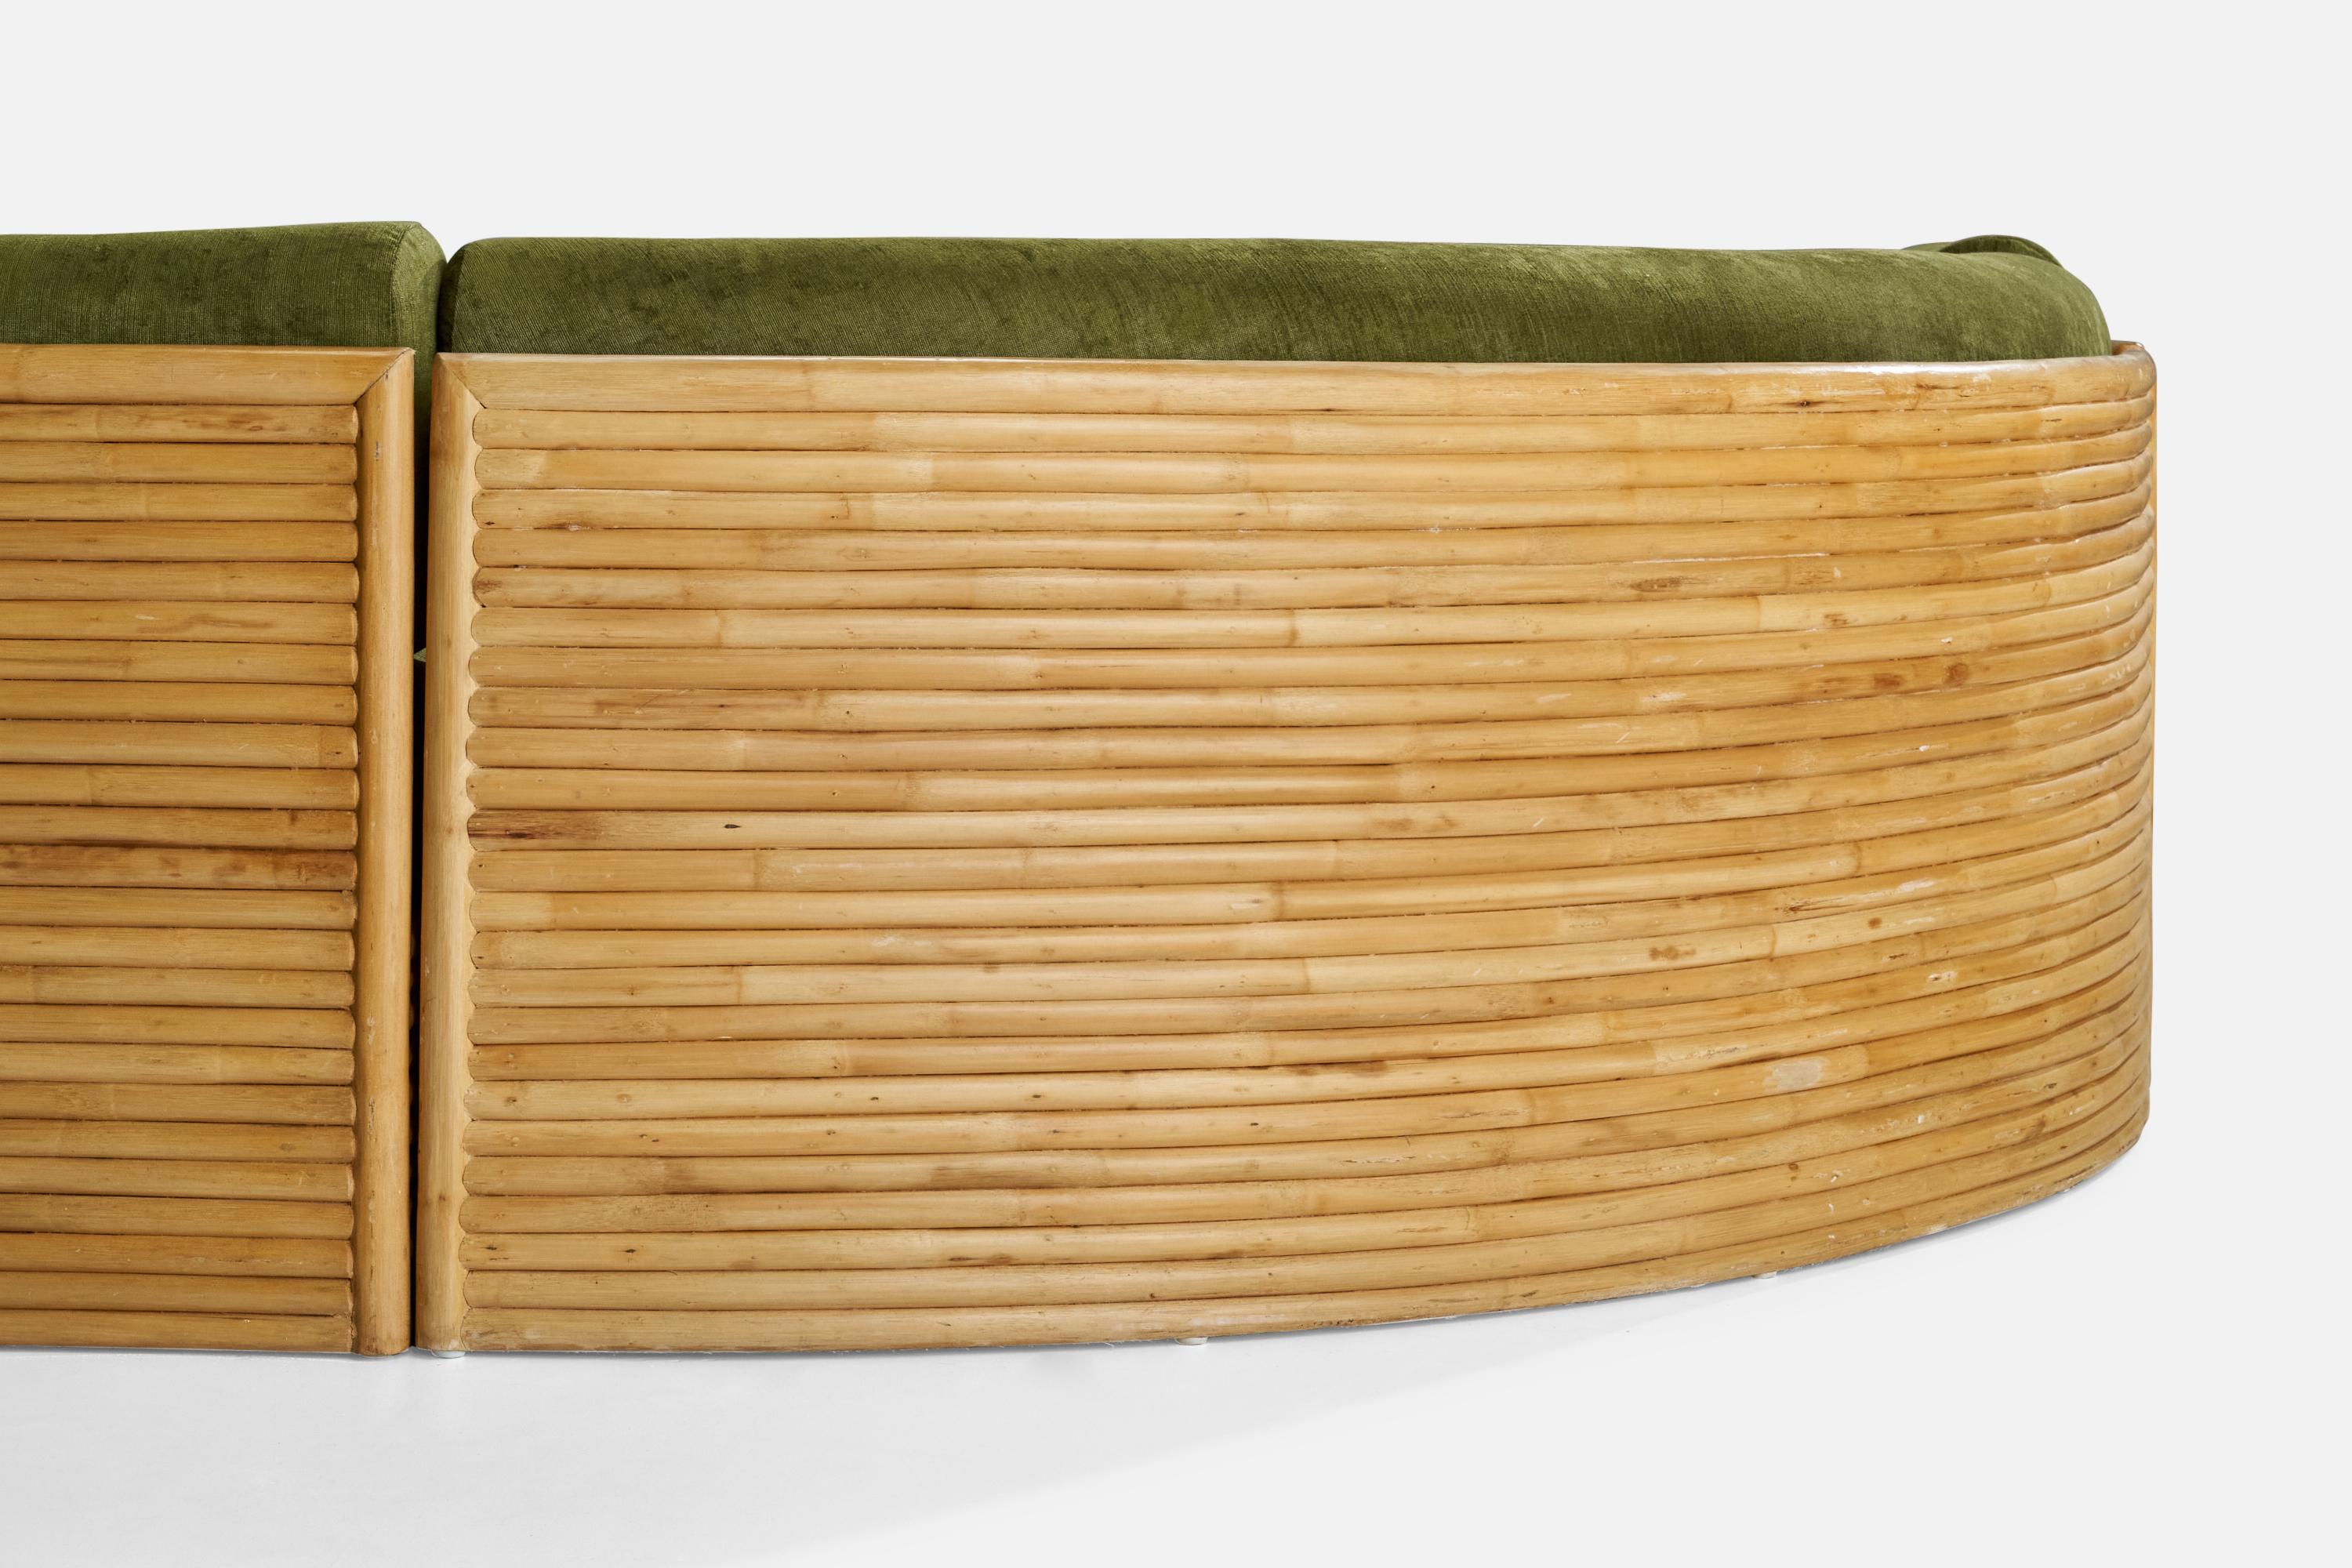 Directional Furniture, Modulsofas, Bambus, Samt, USA, 1970er Jahre (Ende des 20. Jahrhunderts)